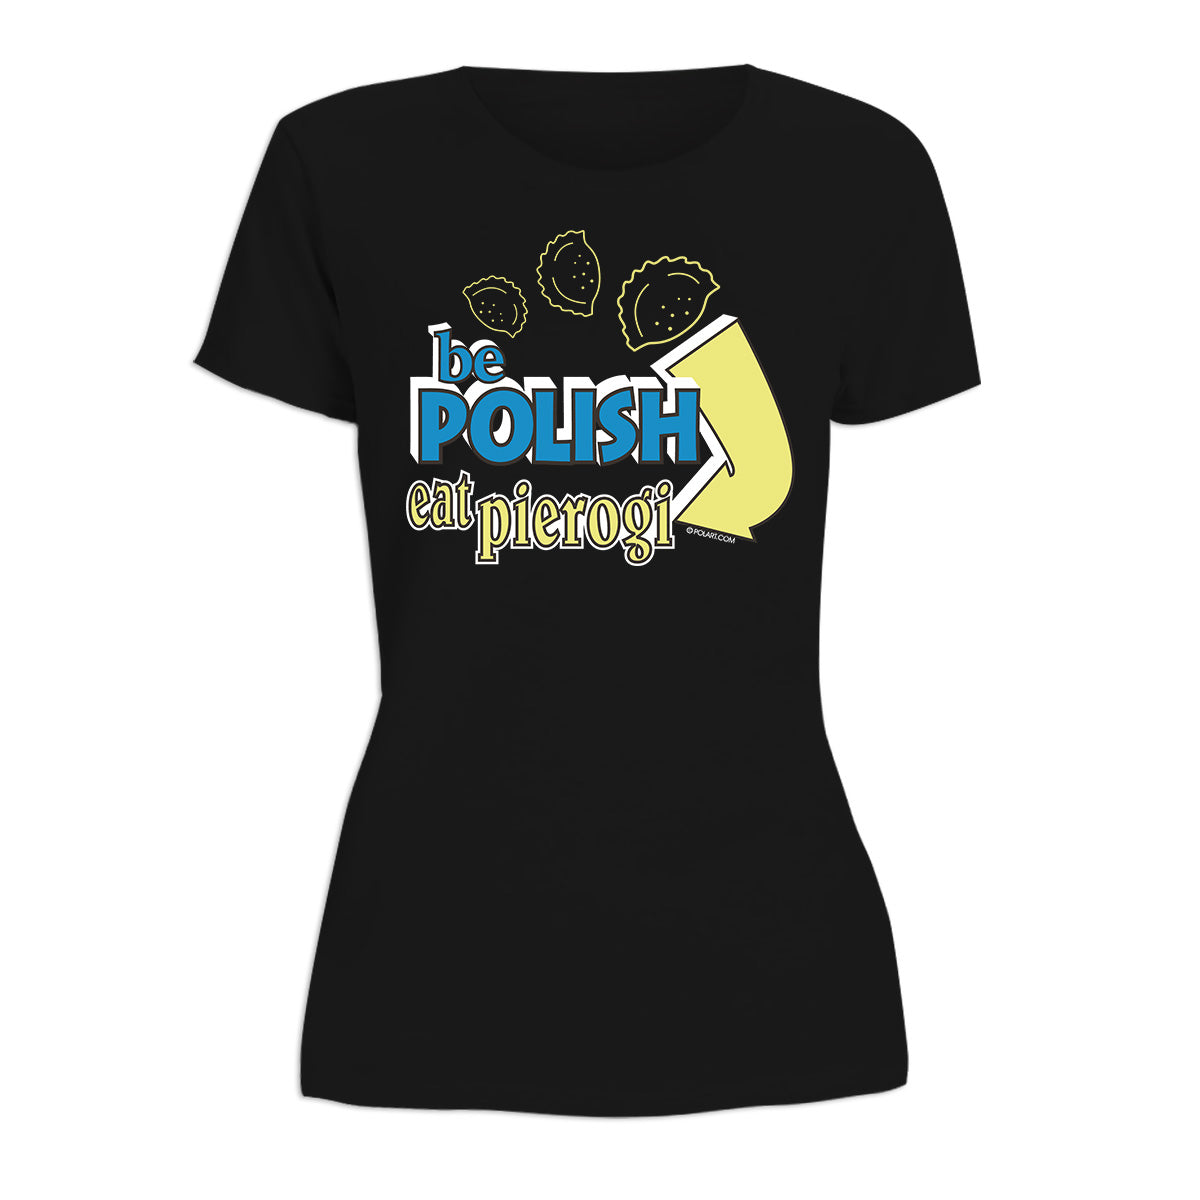 Be Polish Eat Pierogi Women's Short Sleeve Tshirt